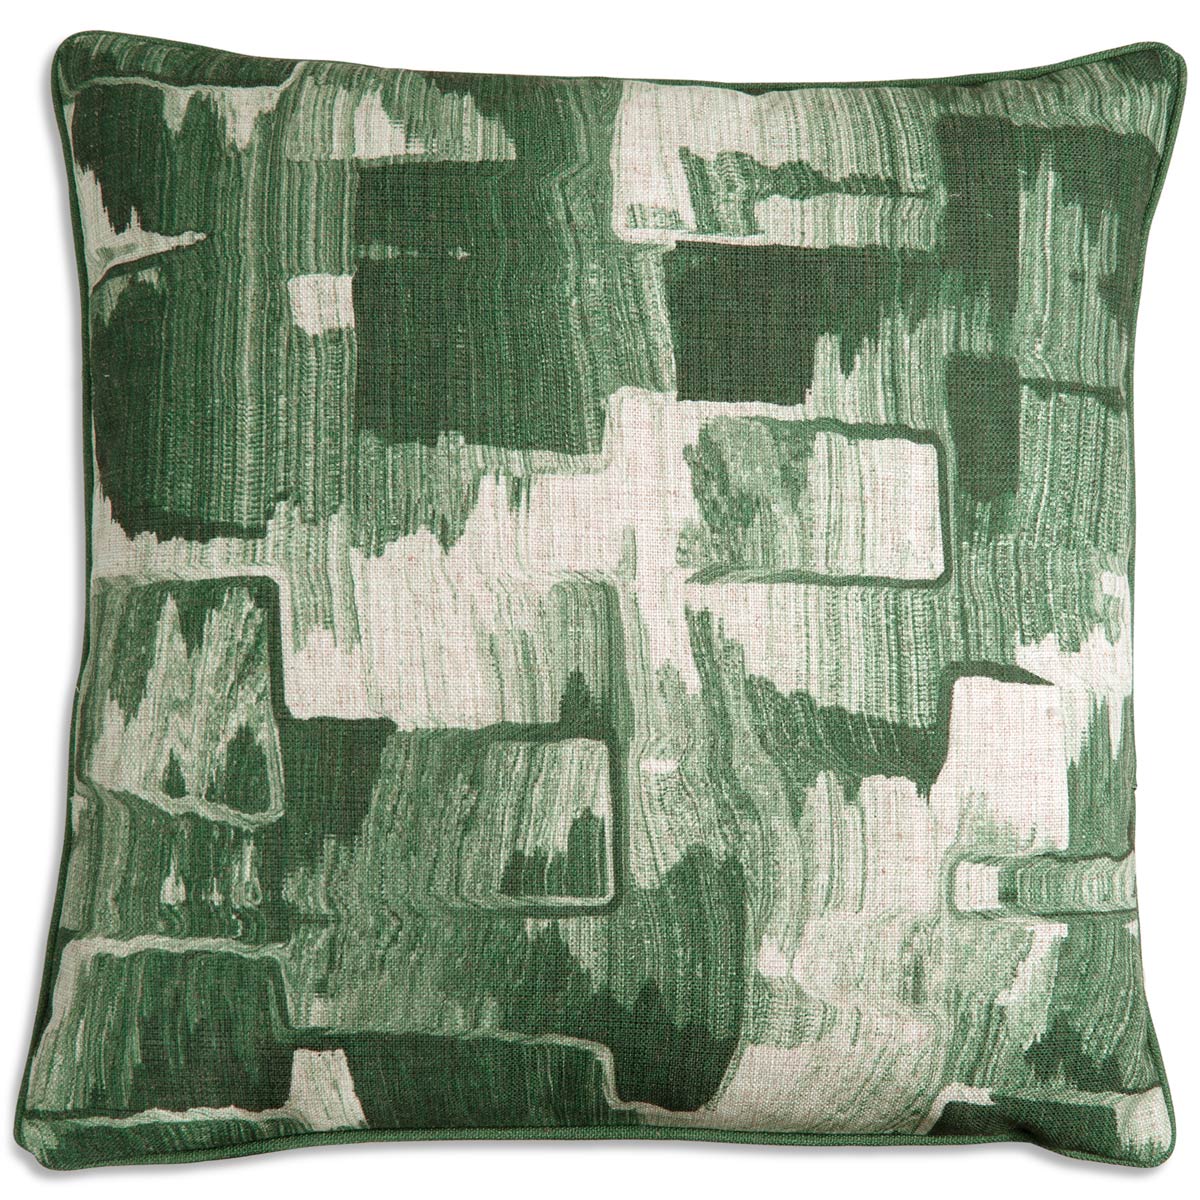 Denim Abstract Pillow in Hunter Green - ModShop1.com